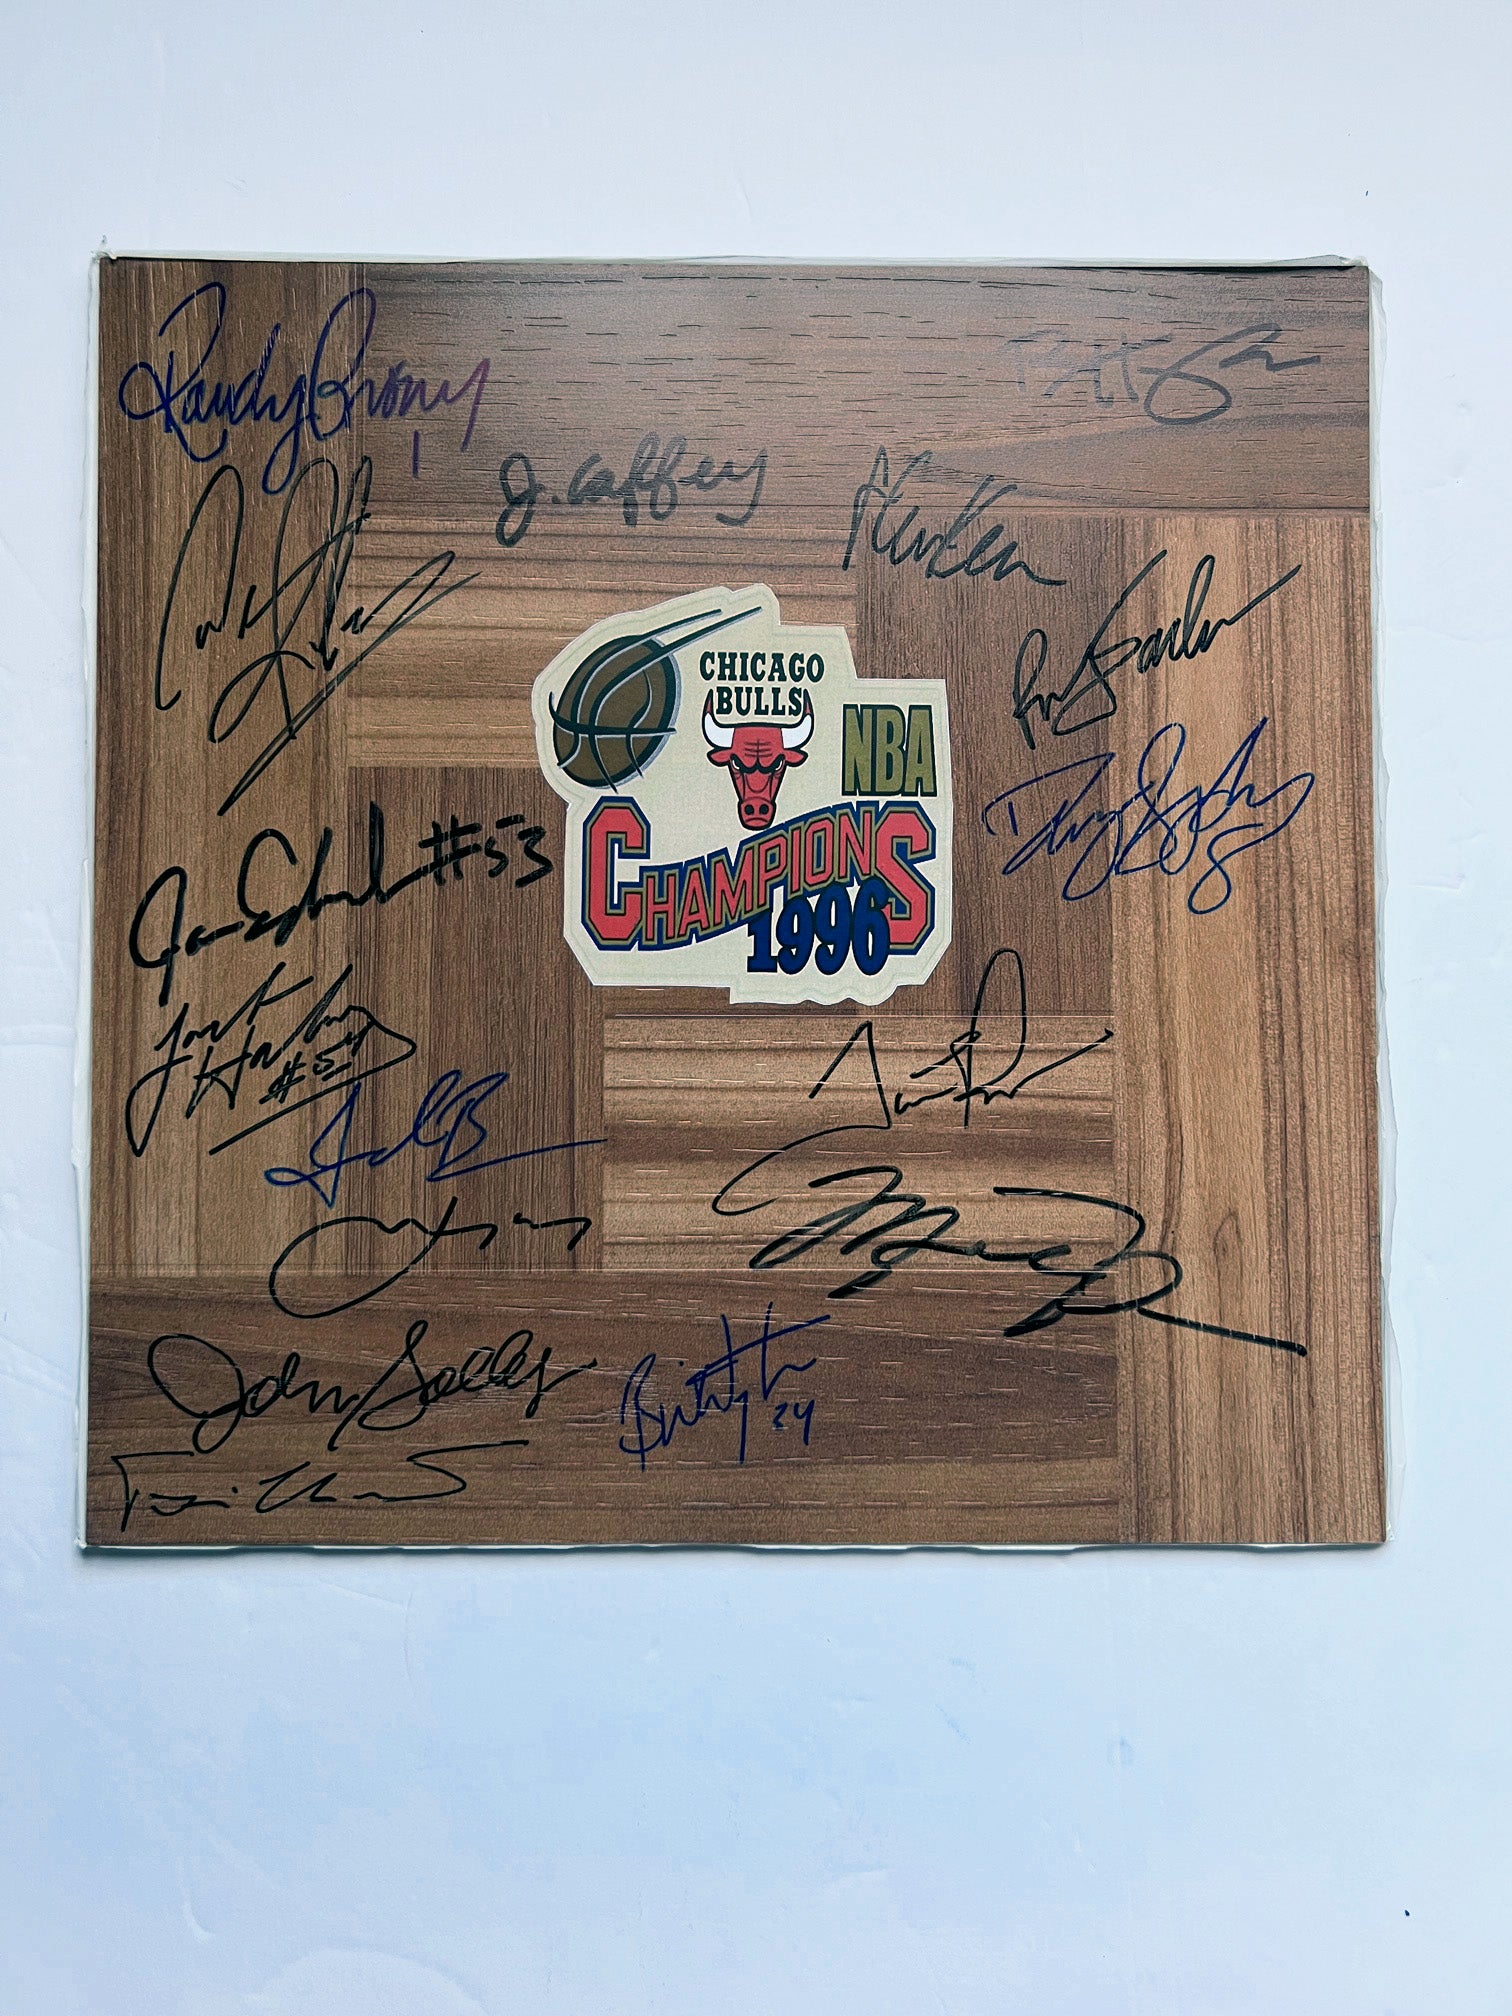 Michael Jordan, Scottie Pippen, Dennis Rodman 1995-96 NBA champions team signed 12x12 parquet hardwood floor with proof